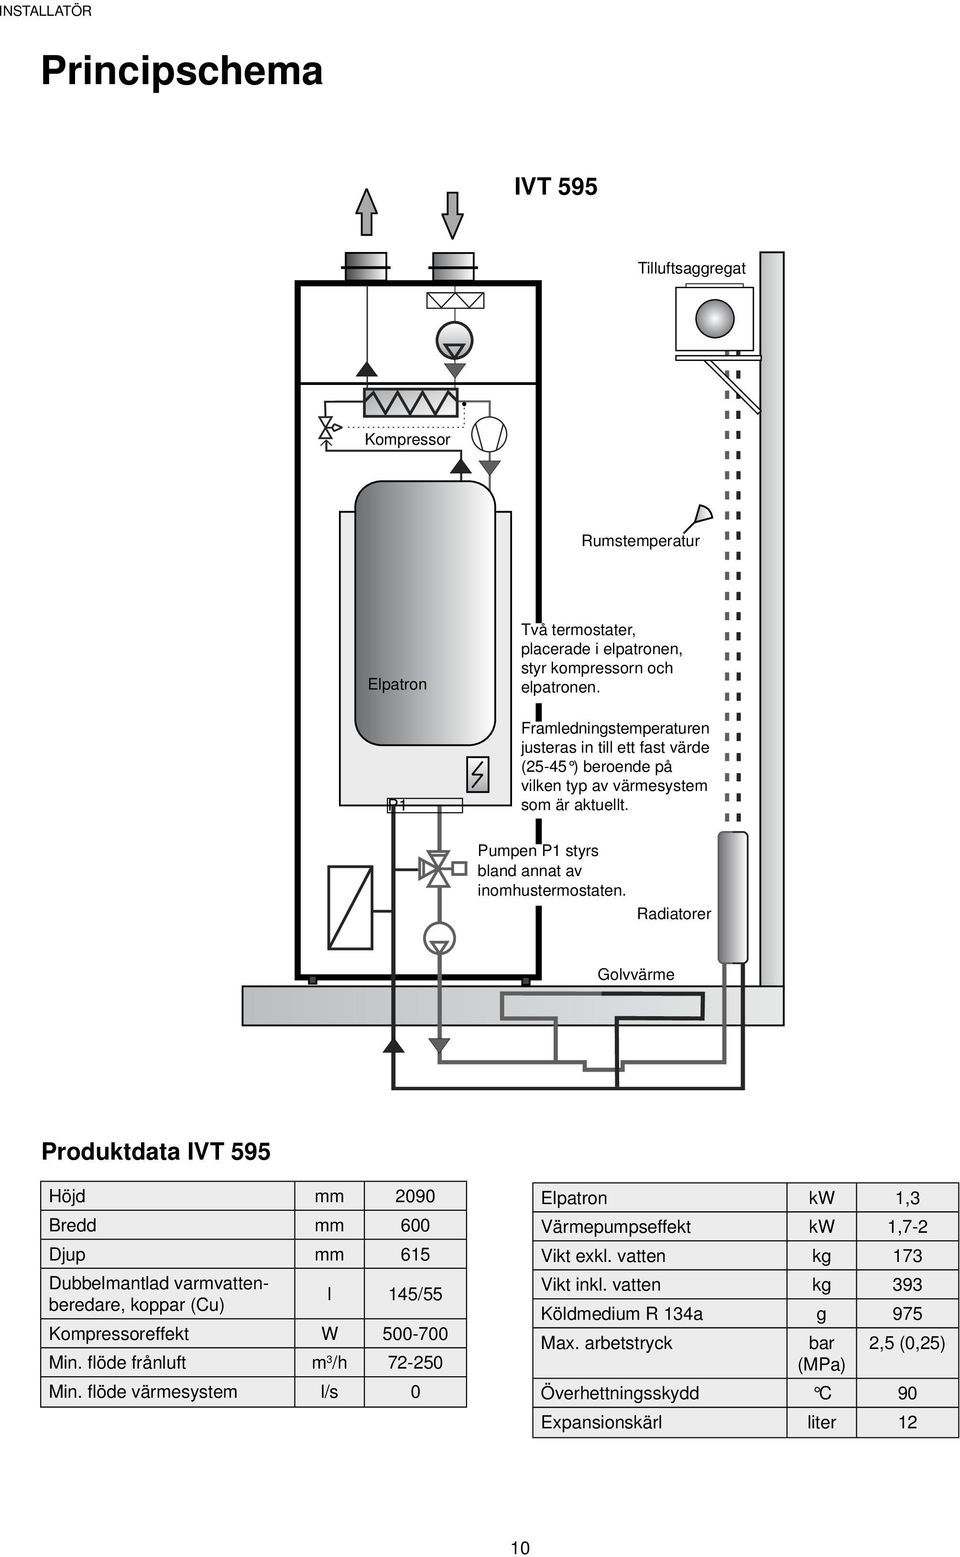 Radiatorer Golvvärme Produktdata IVT 595 Höjd mm 2090 Bredd mm 600 Djup mm 615 Dubbelmantlad varmvattenberedare, koppar (Cu) l 145/55 Kompressoreffekt W 500-700 Min.